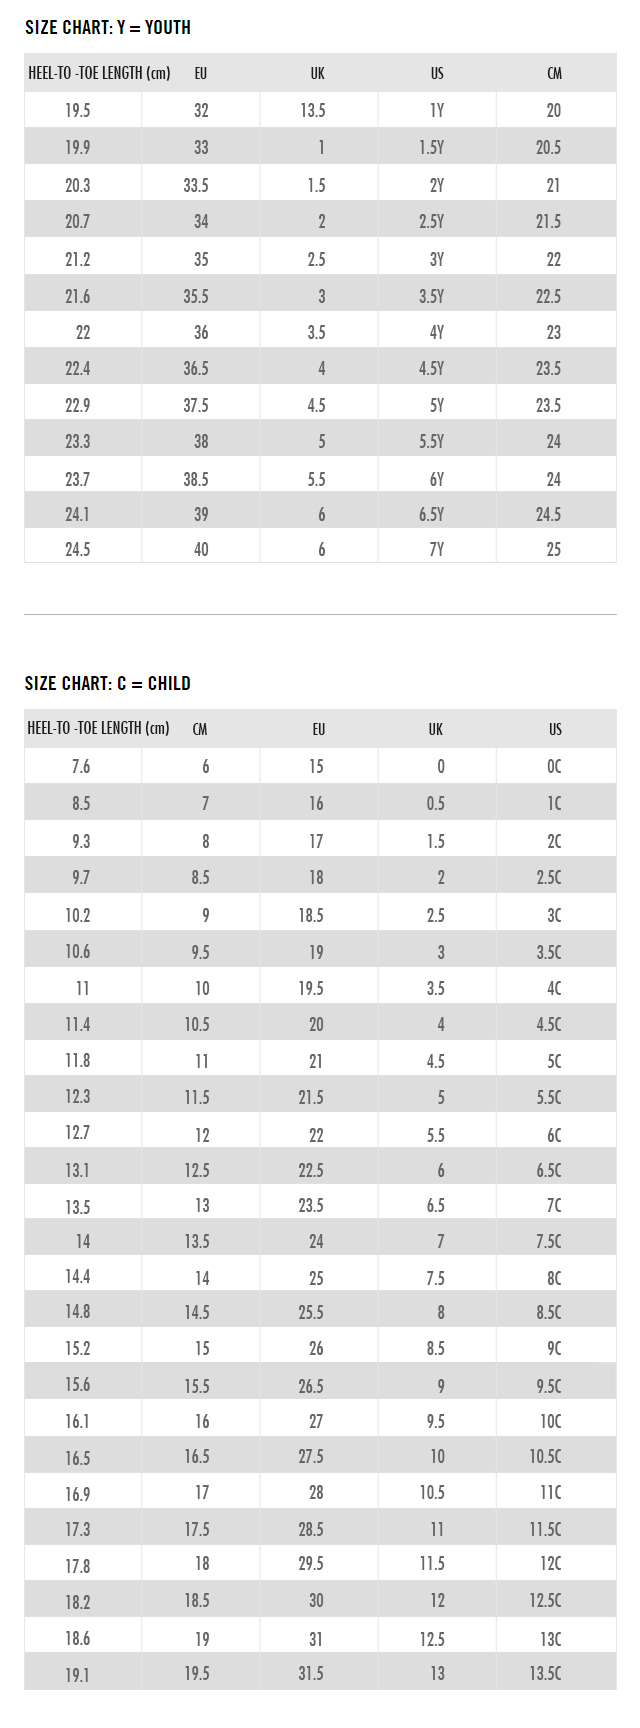 Nike Size Chart Hk